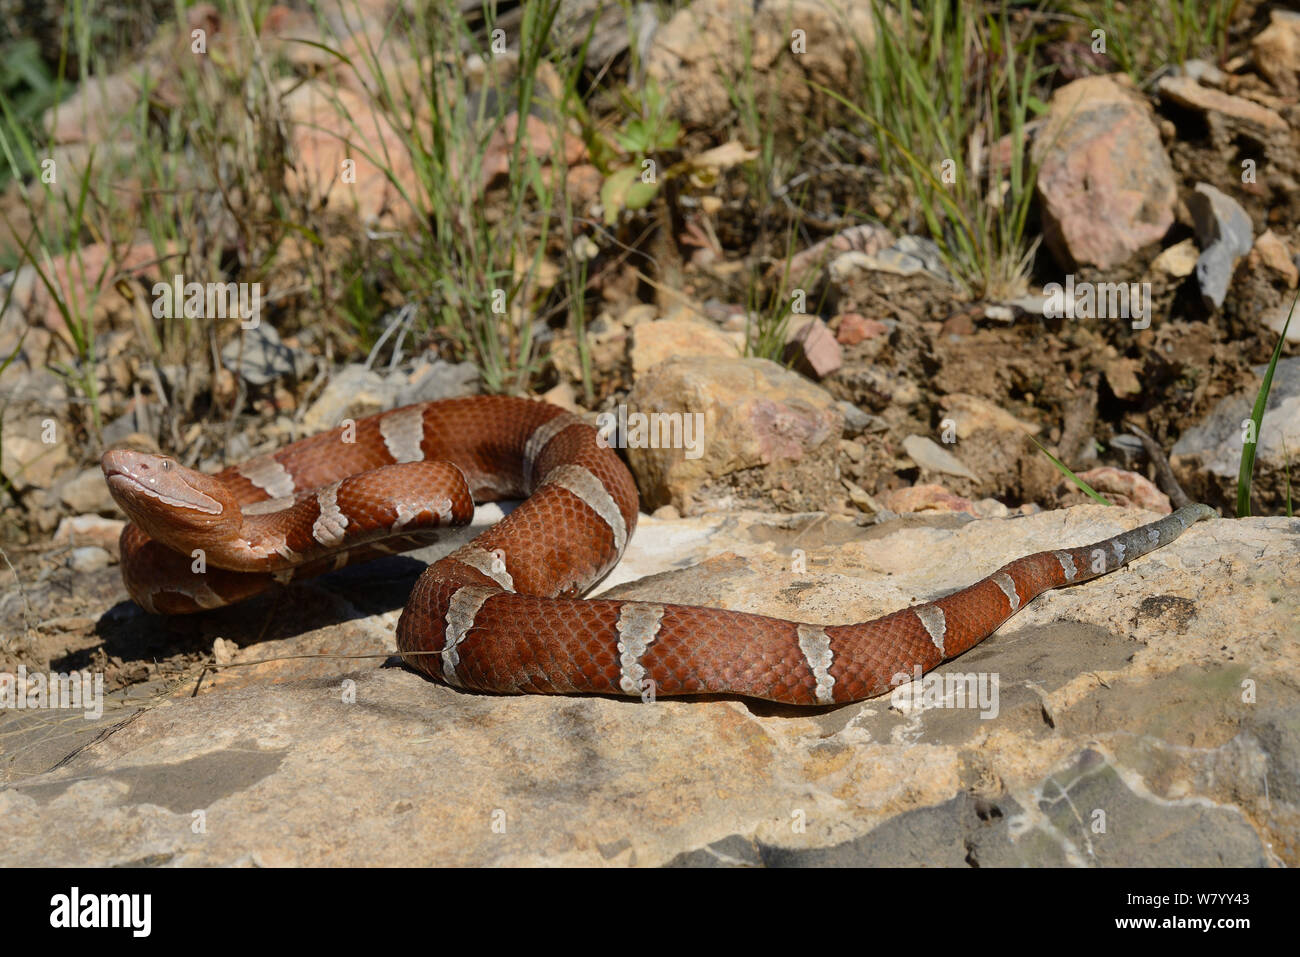 Texas copperhead snake (Agkistrodon contortrix laticinctus) moving over rocks, Texas, USA. September. Controlled conditions. Stock Photo